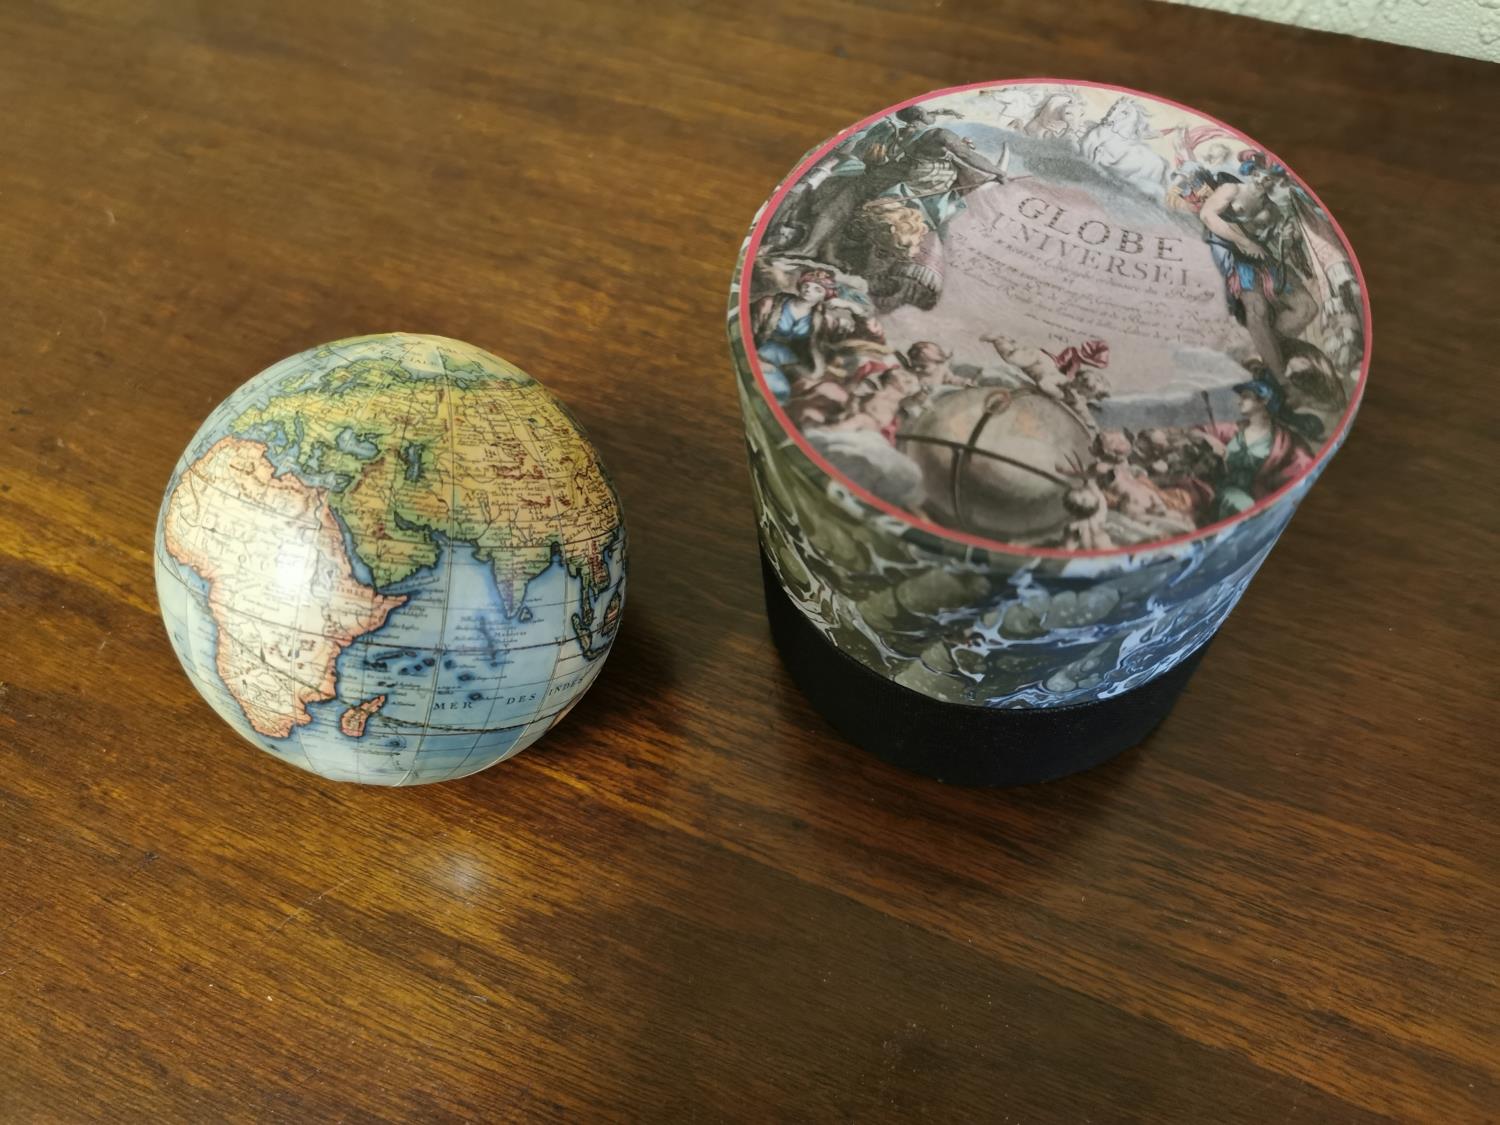 Miniature world globe with original box.